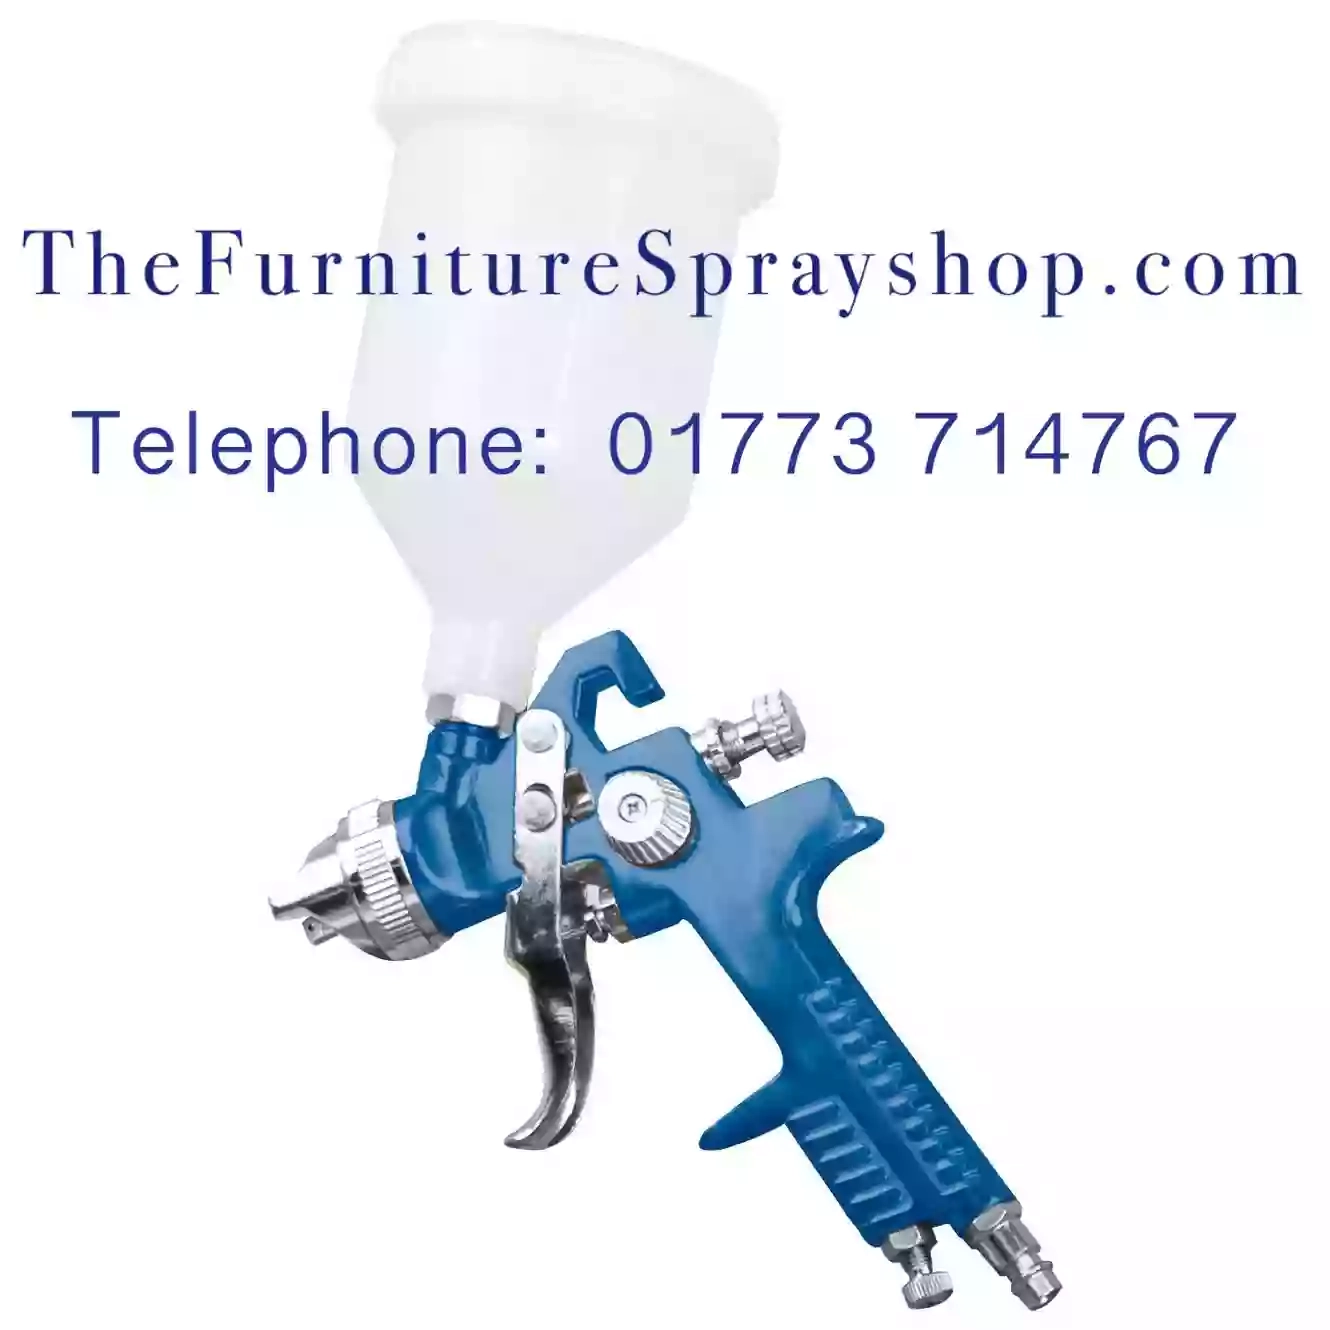 the furniture sprayshop Ltd